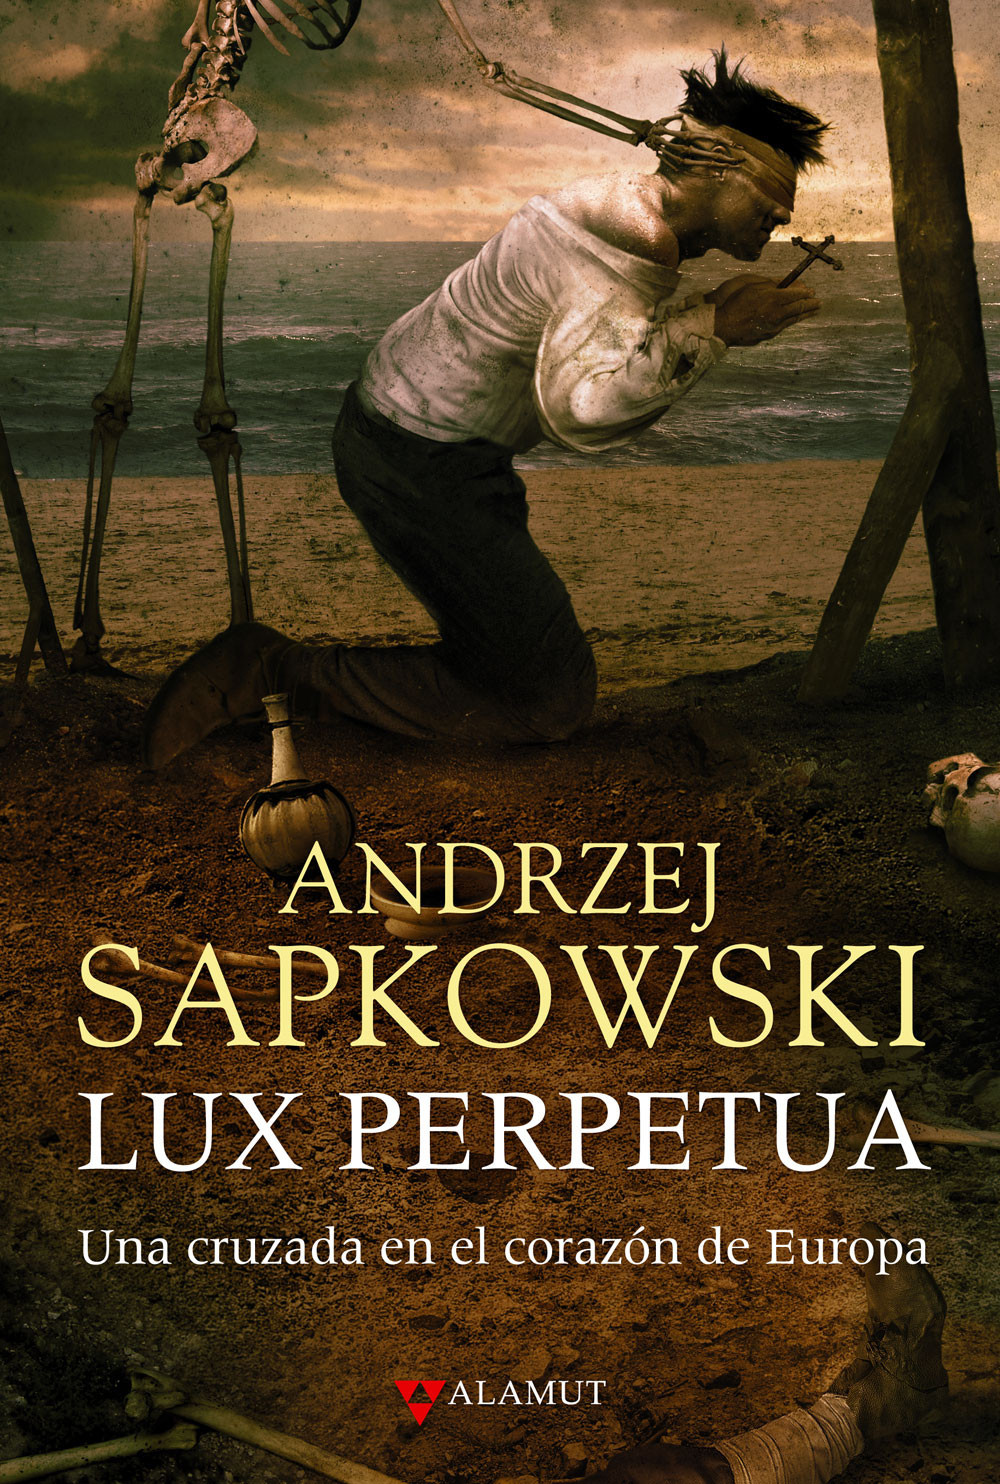 Andrzej Sapkowski, Francisco Otero Macías: Lux perpetua (Paperback, Español language, 2016, Alamut)